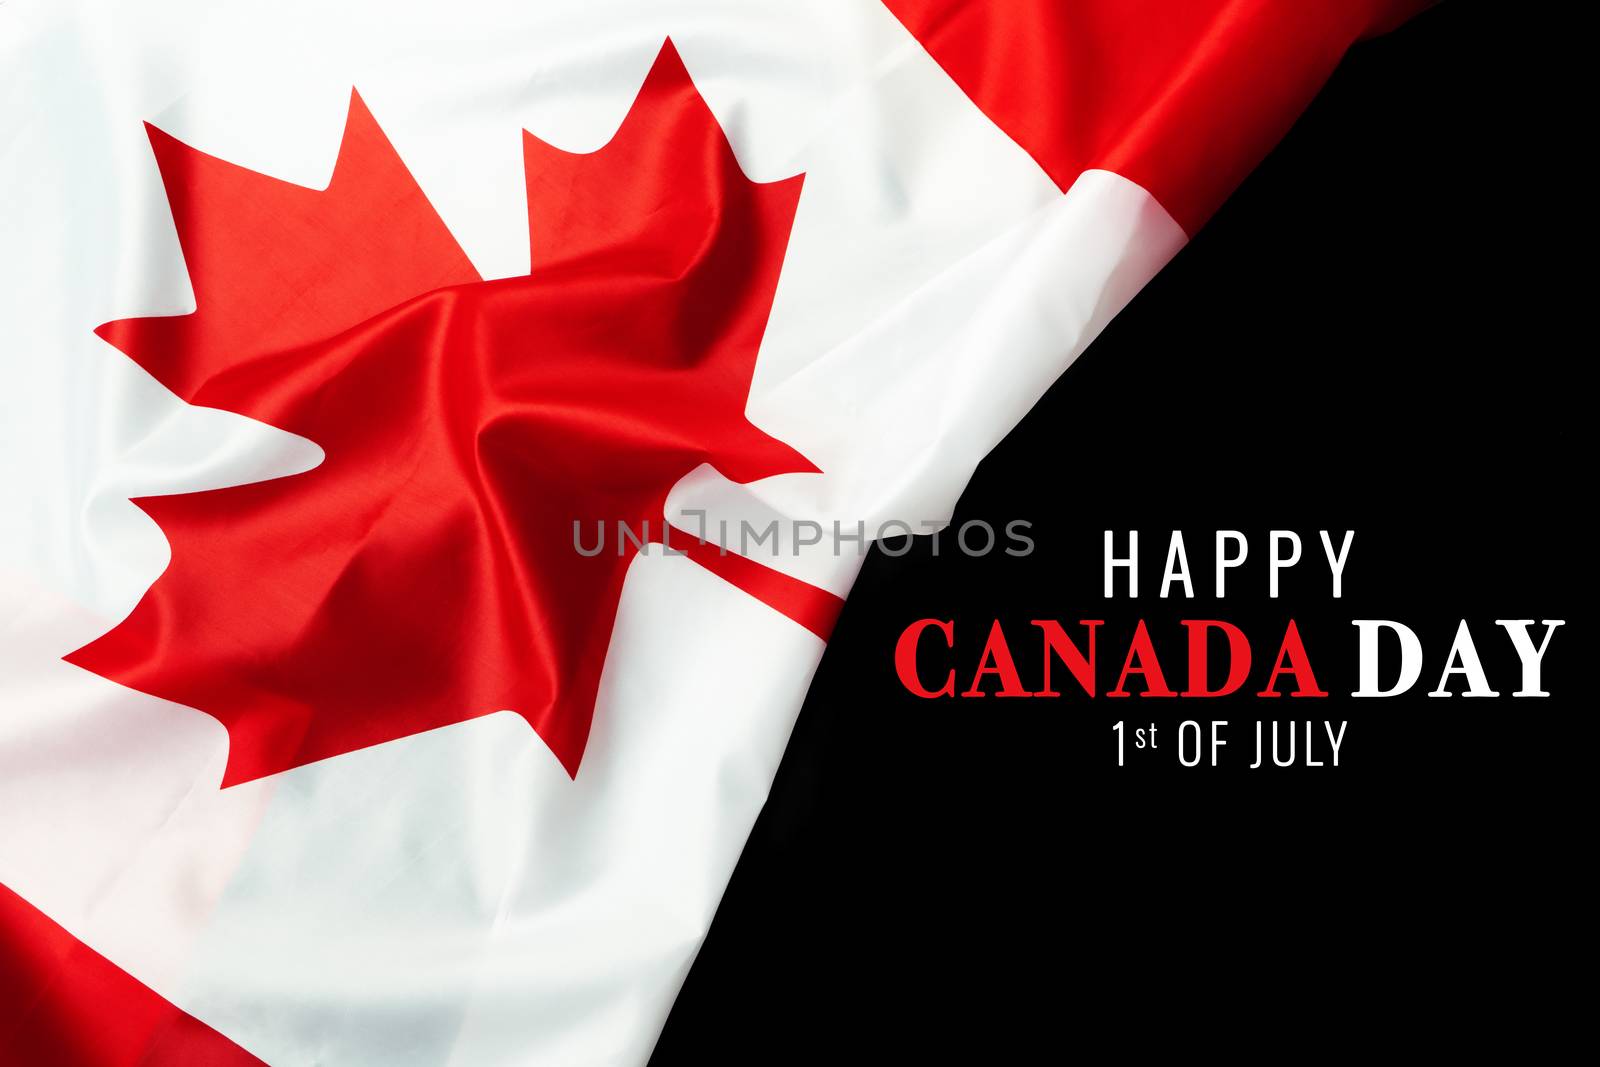 Happy Canada Day with Canada flag background by psodaz